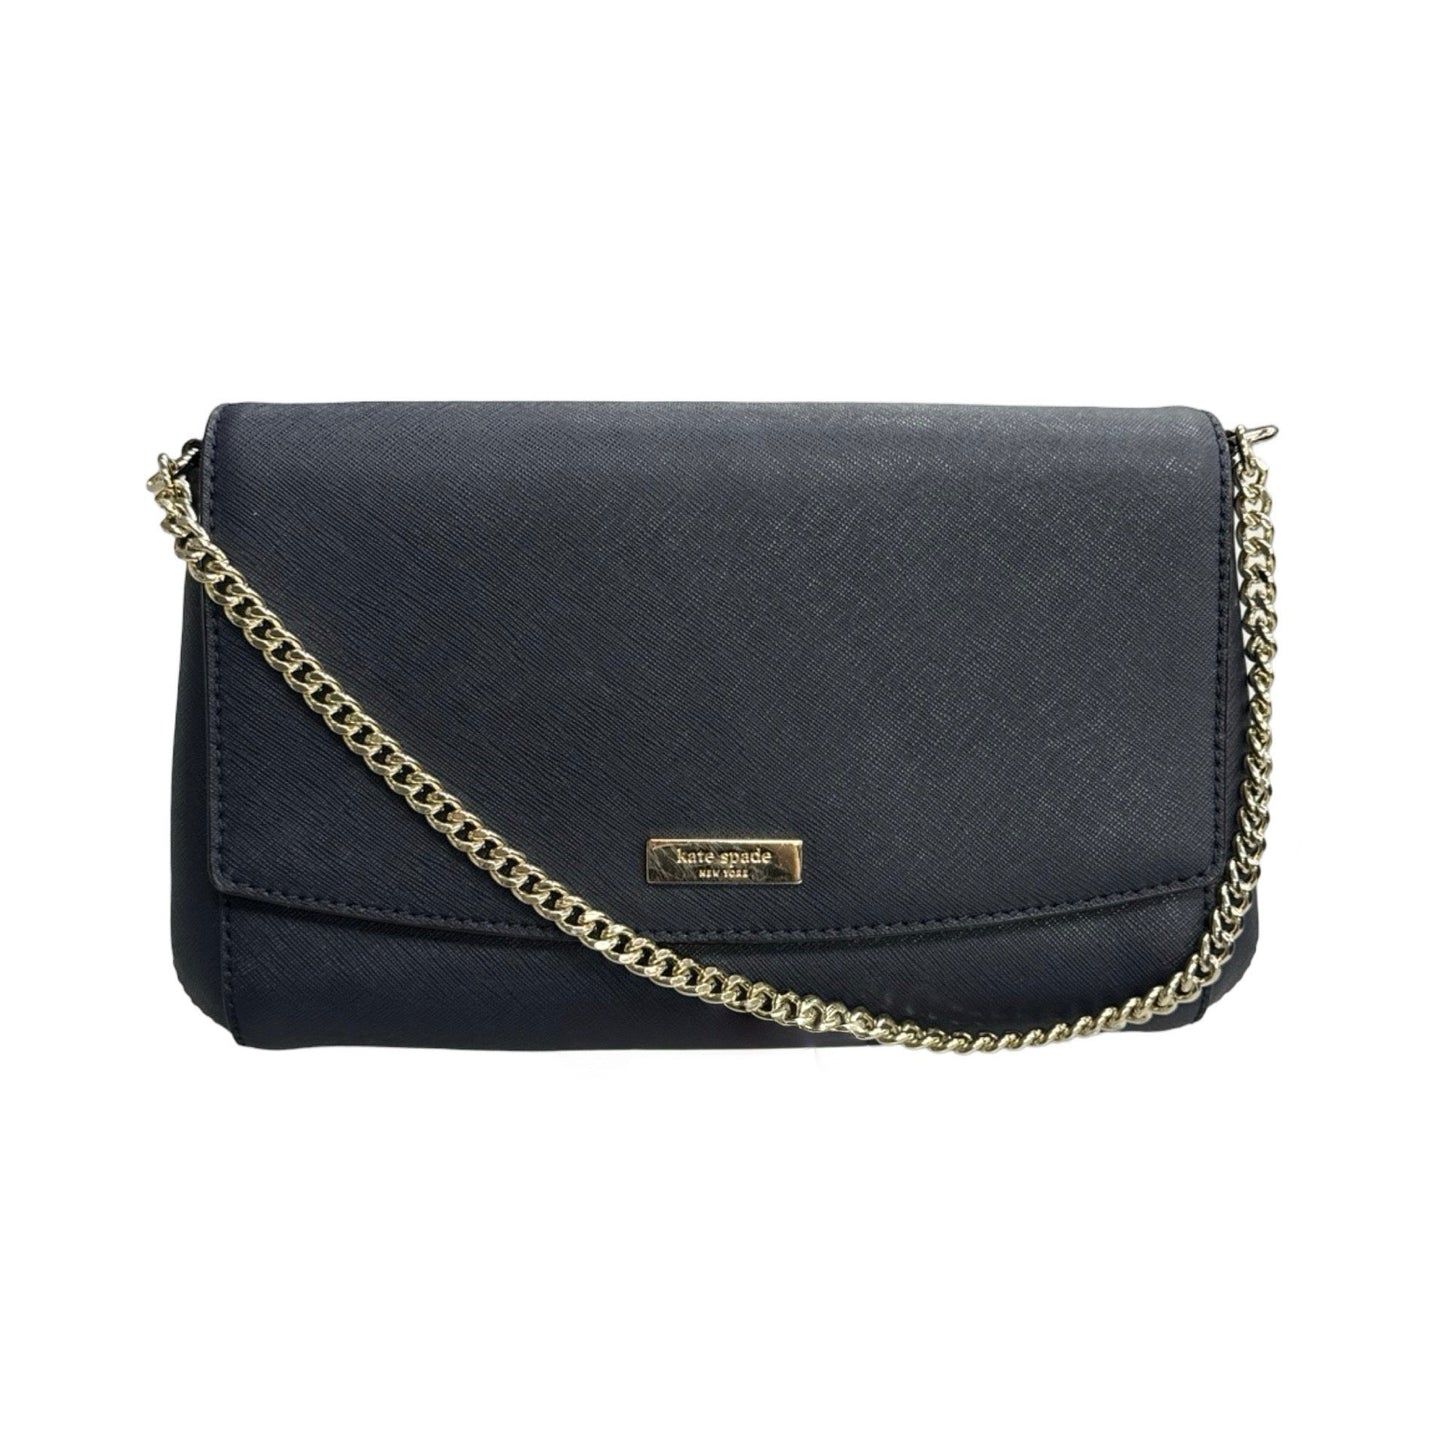 Navy Blue Handbag Designer Kate Spade, Size Small